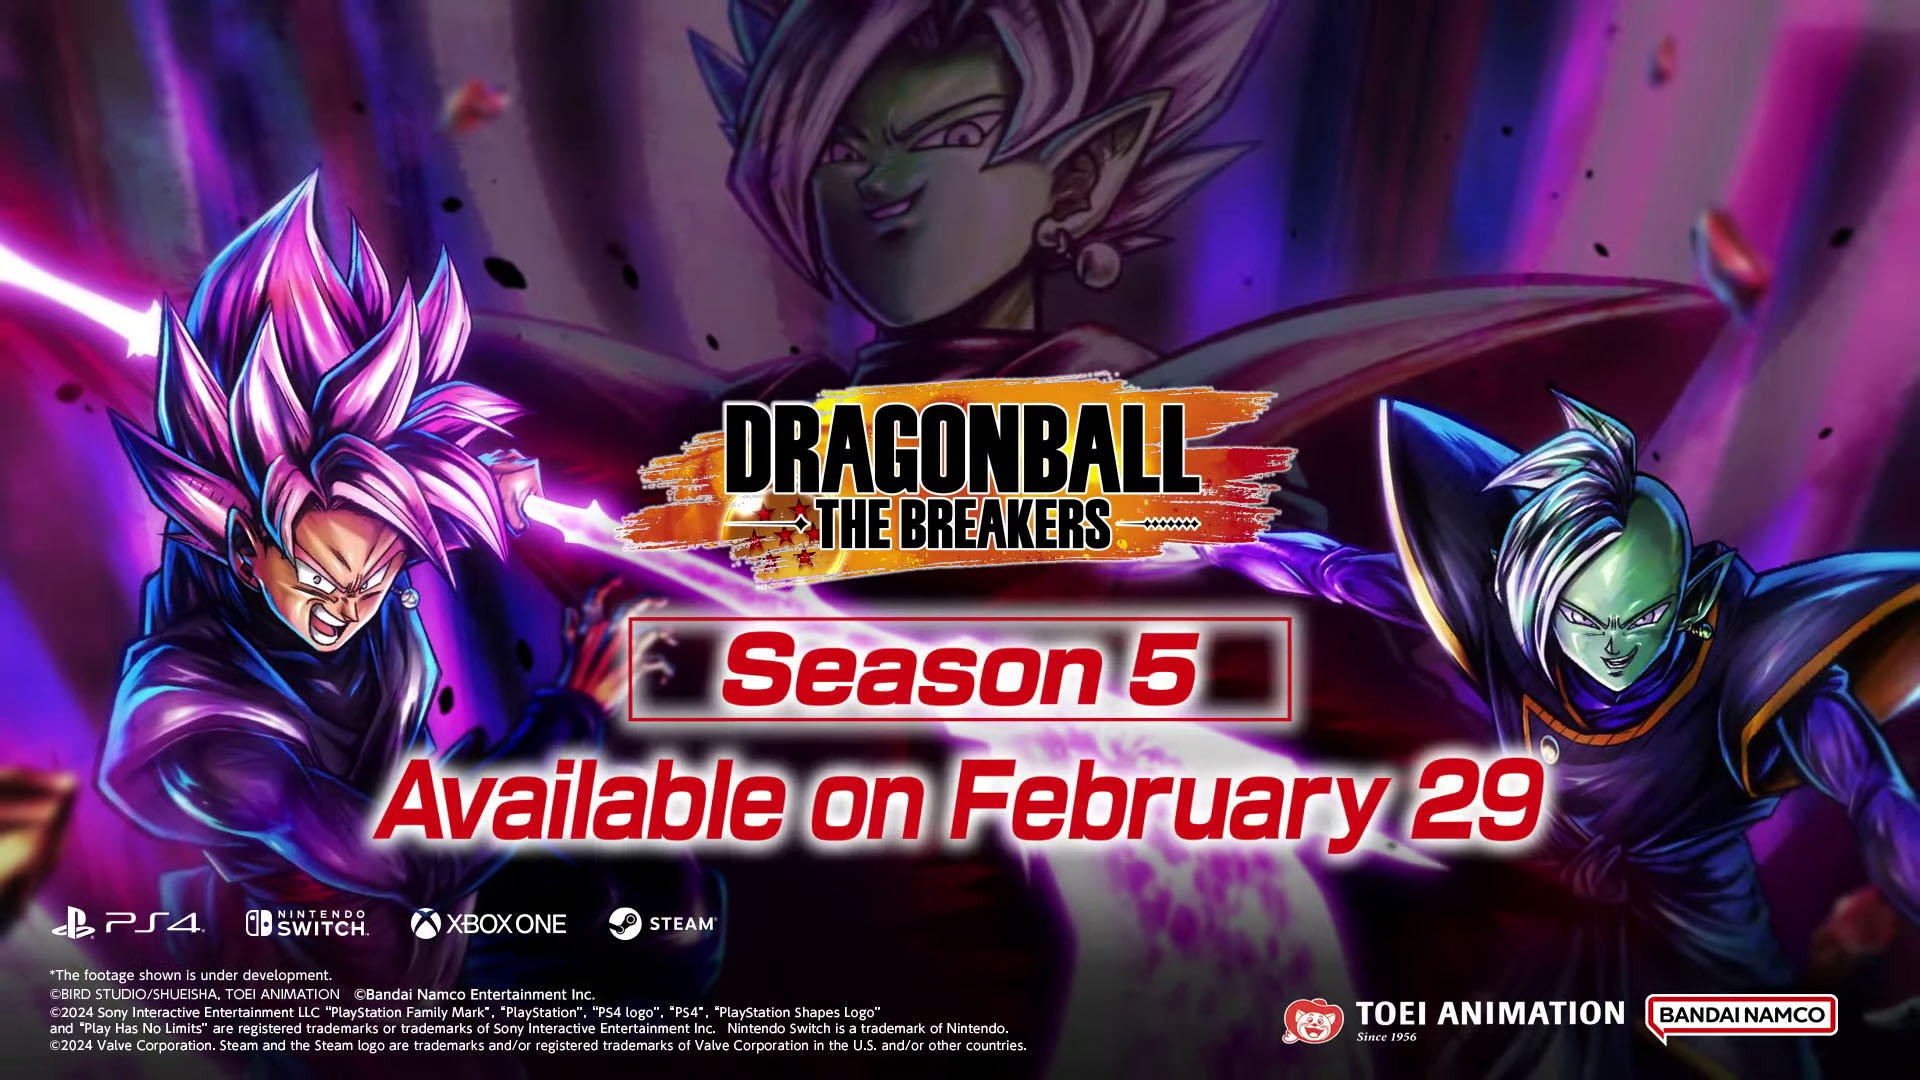 # Dragon Ball: The Breakers Season 5 launches February 29